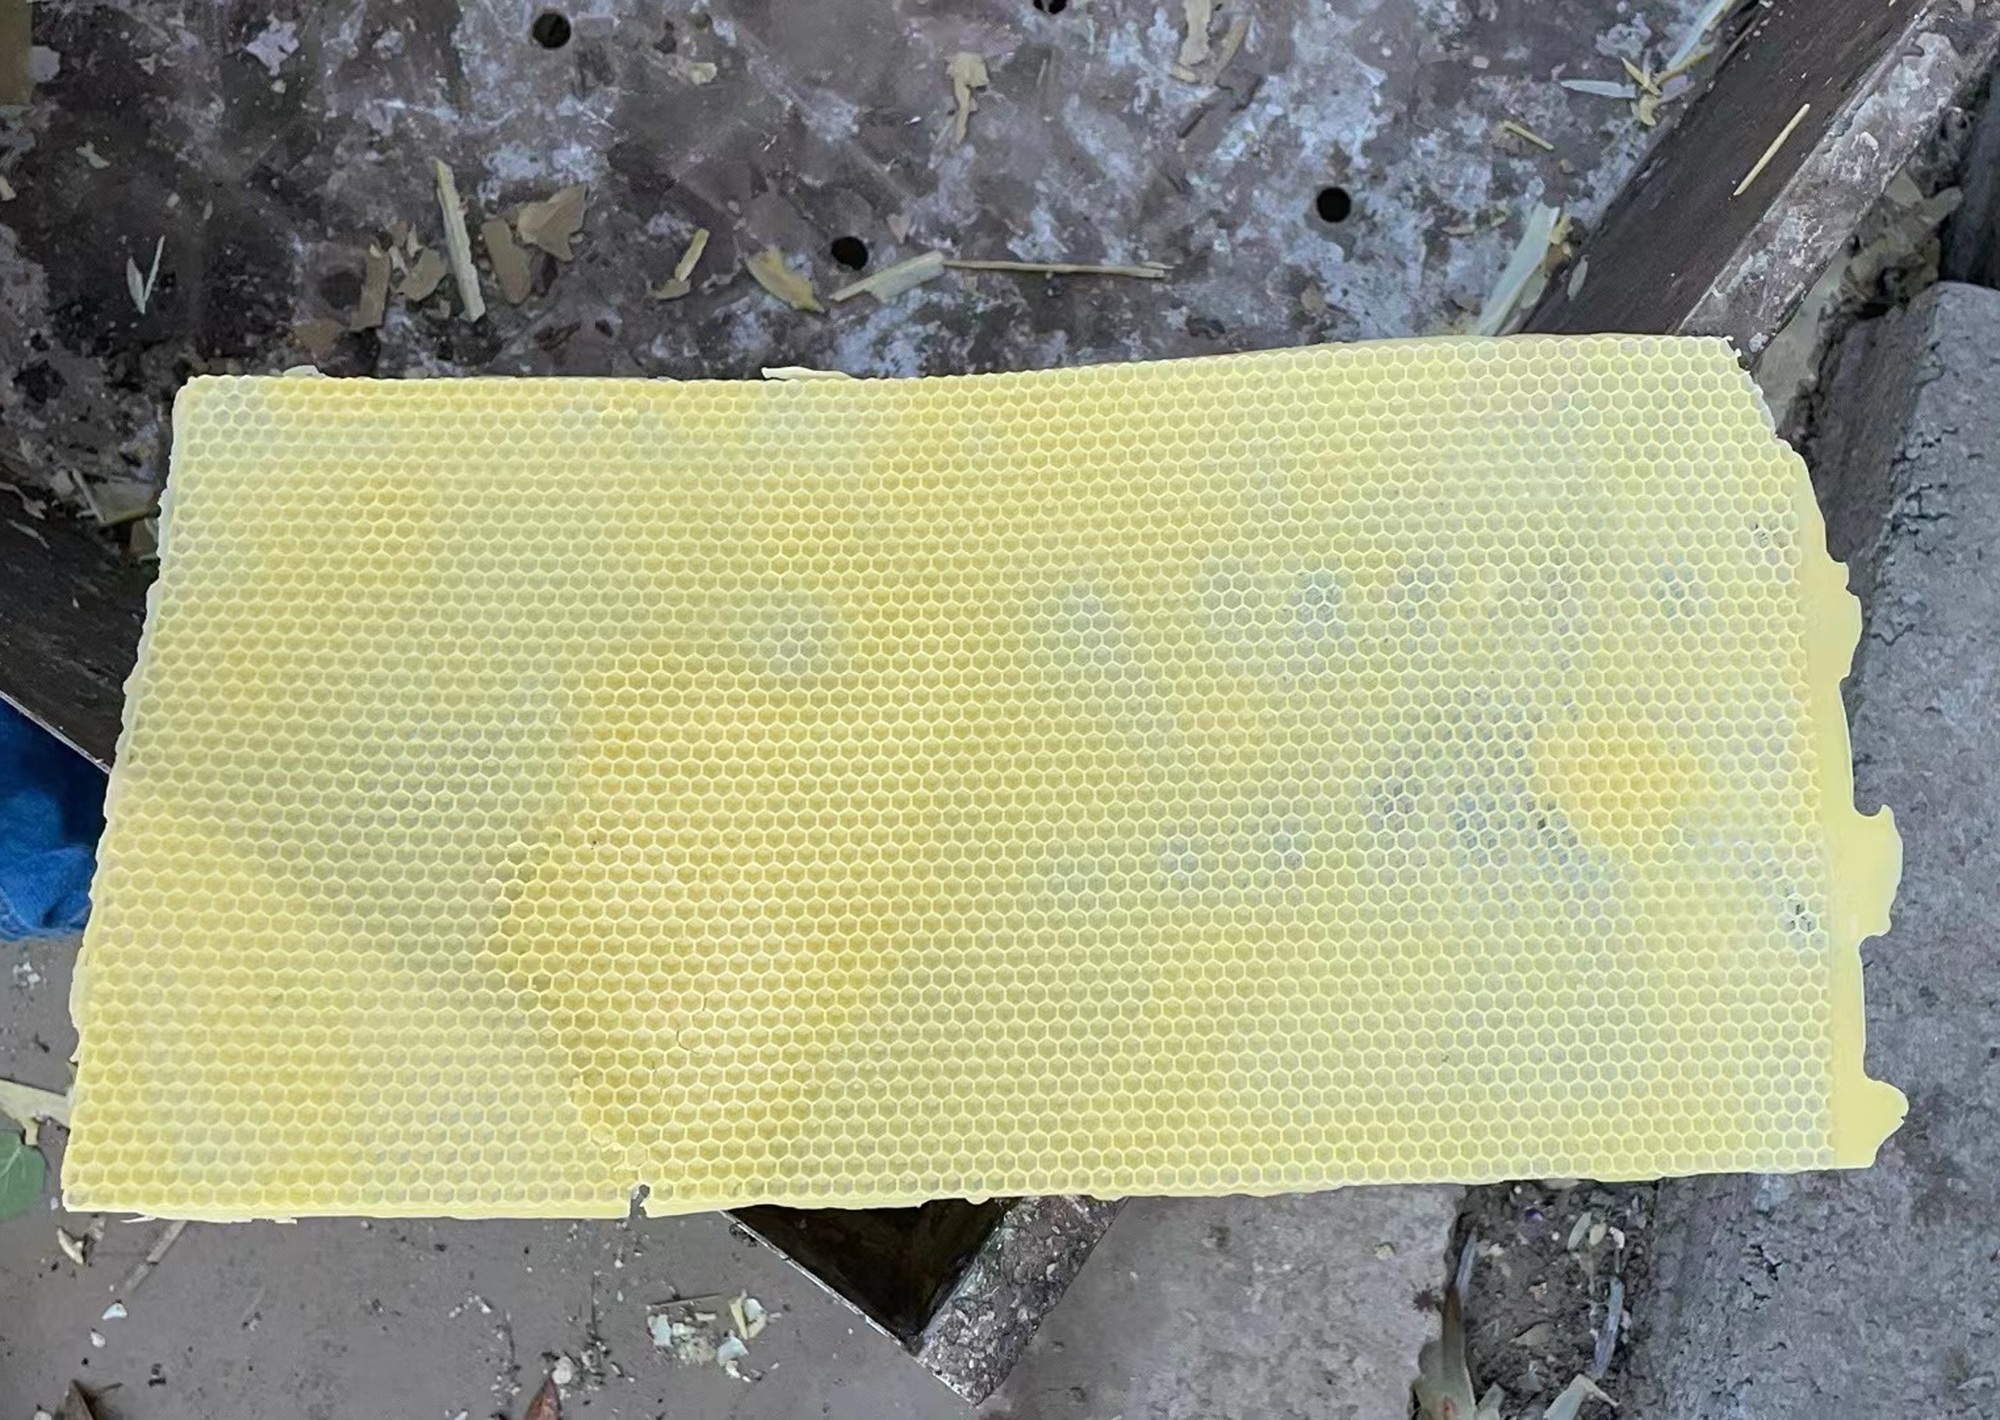 Andra trädgårdsförsörjningar Beeekeeper Soft PVC Beeswax Mold Foundation Bee Hive Basis Press Sheet Mold Beekeeping Tools Set 221028